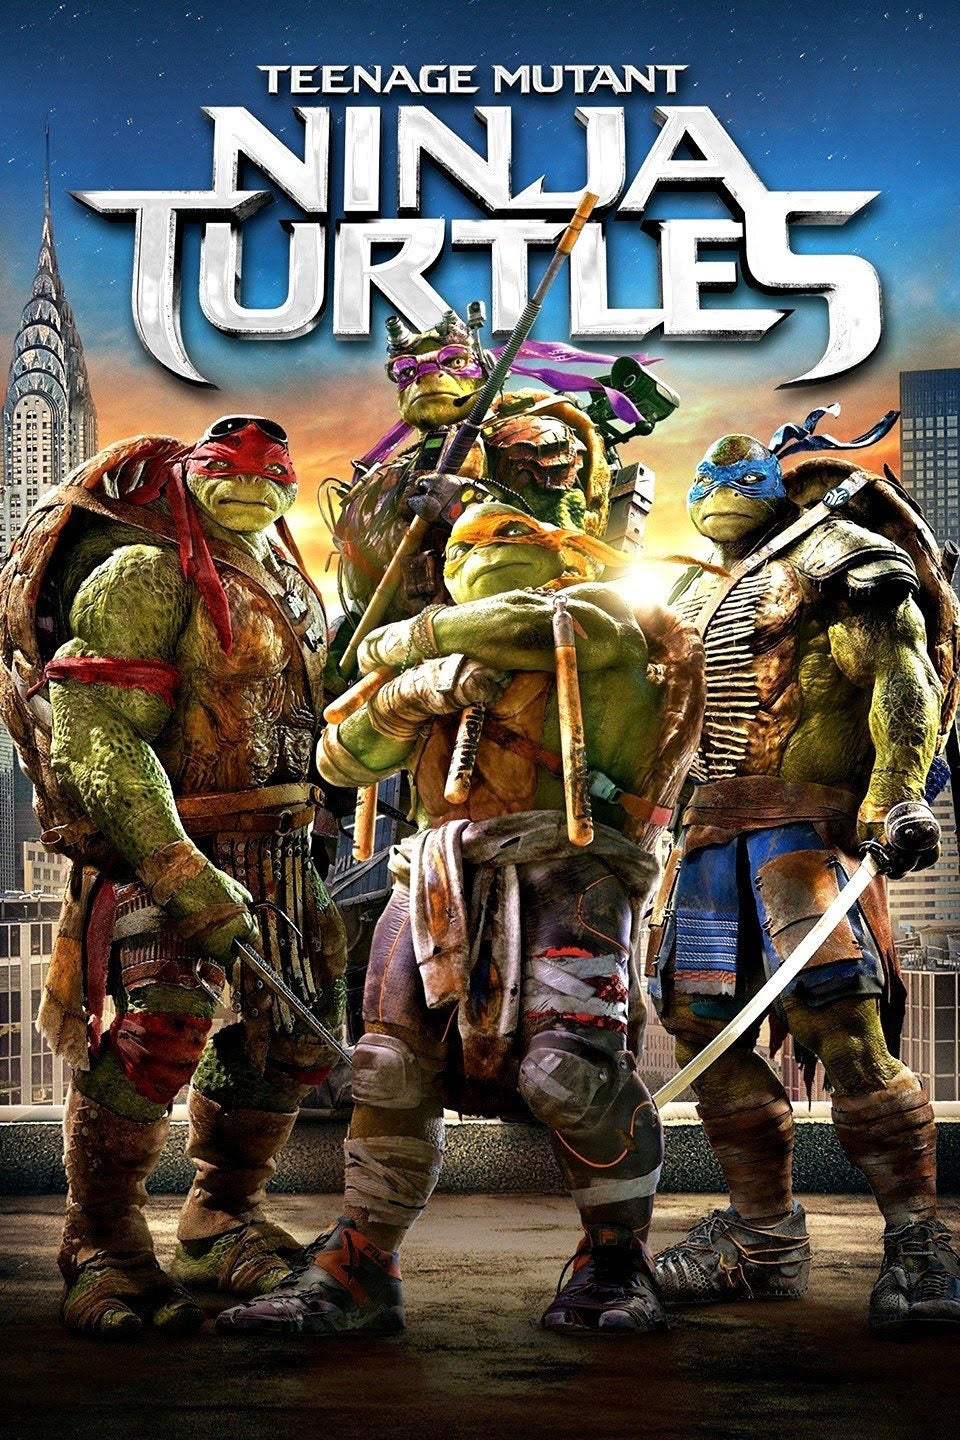 Teenage Mutant Ninja Turtles (2014) Vudu HD redemption only